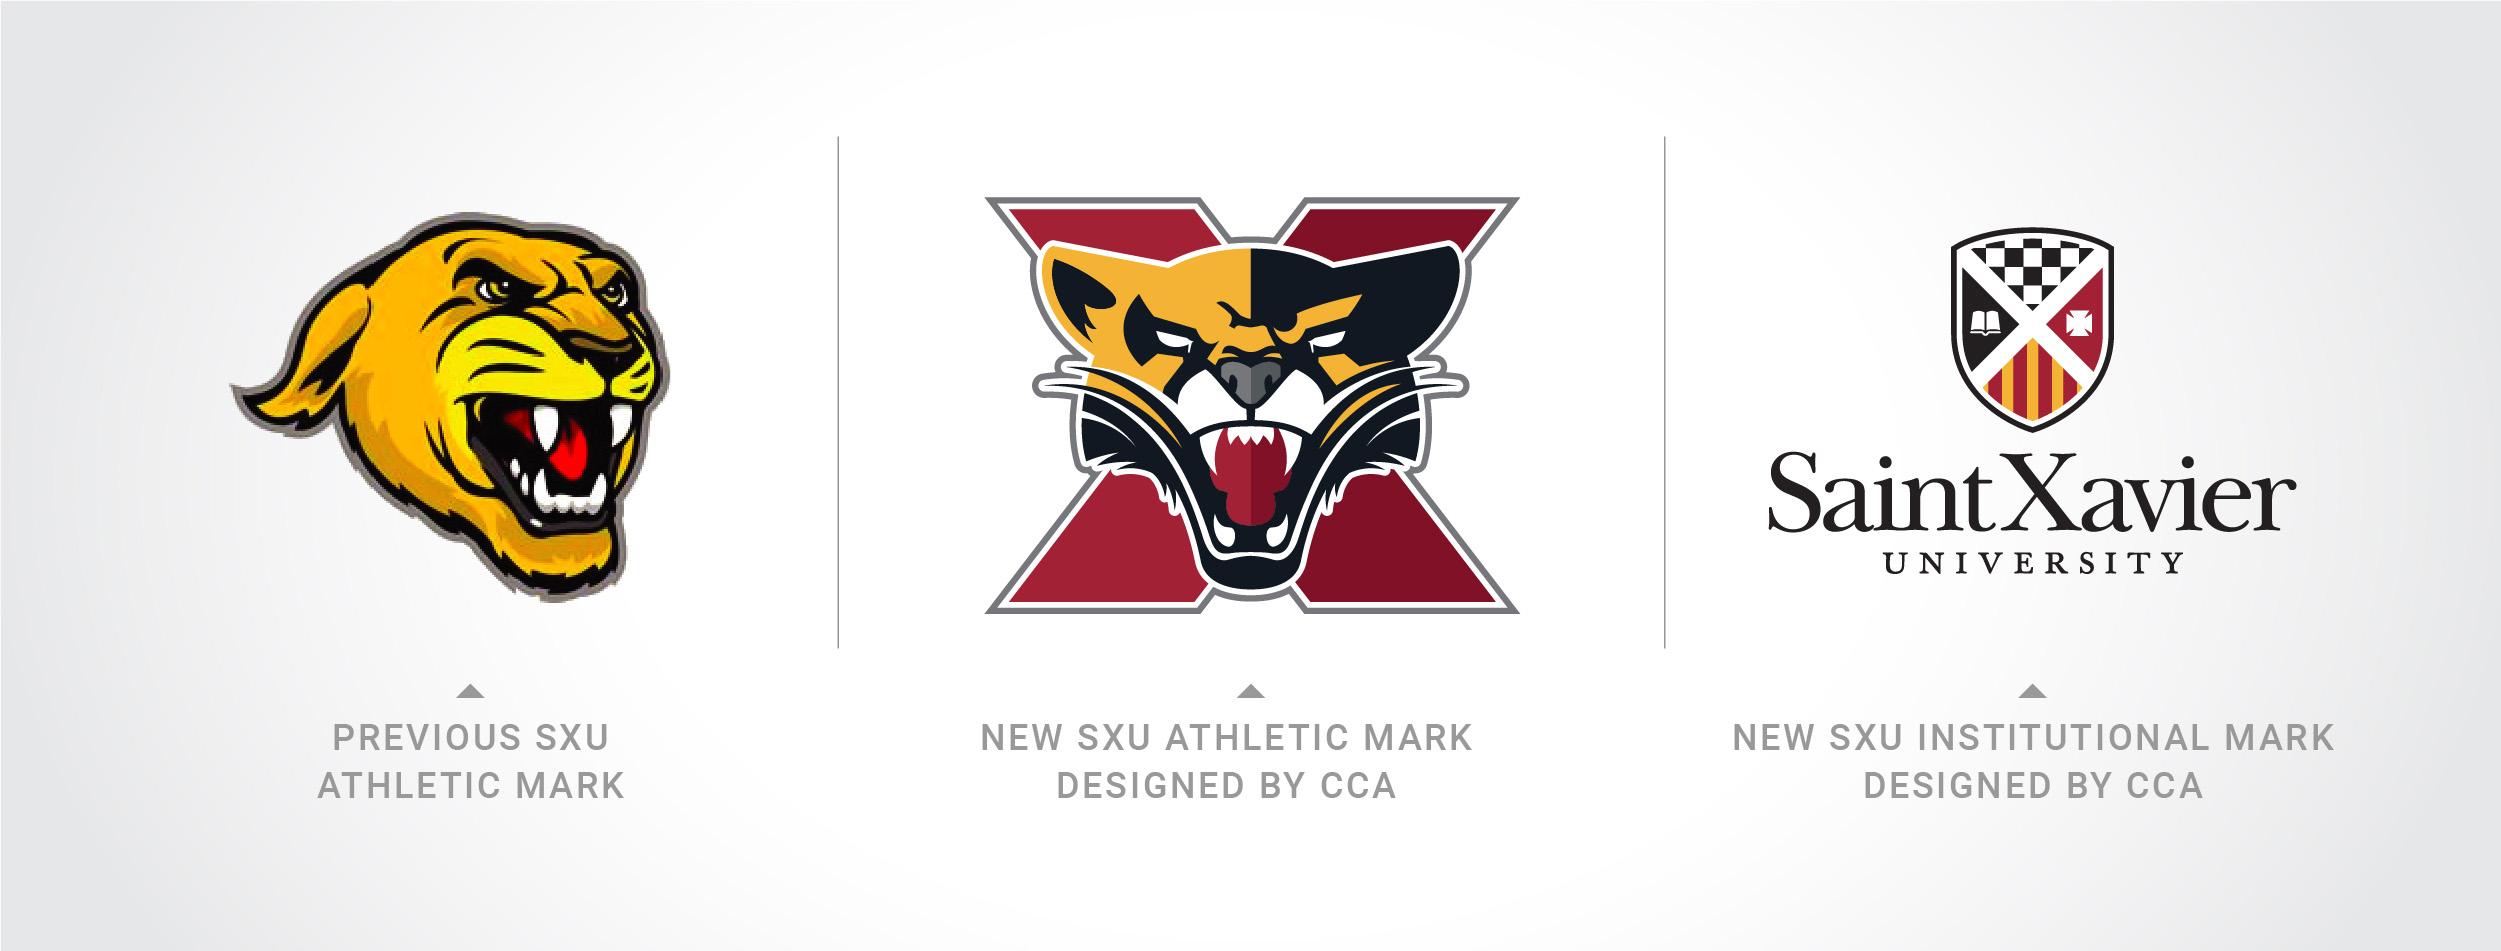 Saint Xavier University's new athletic logo vs old